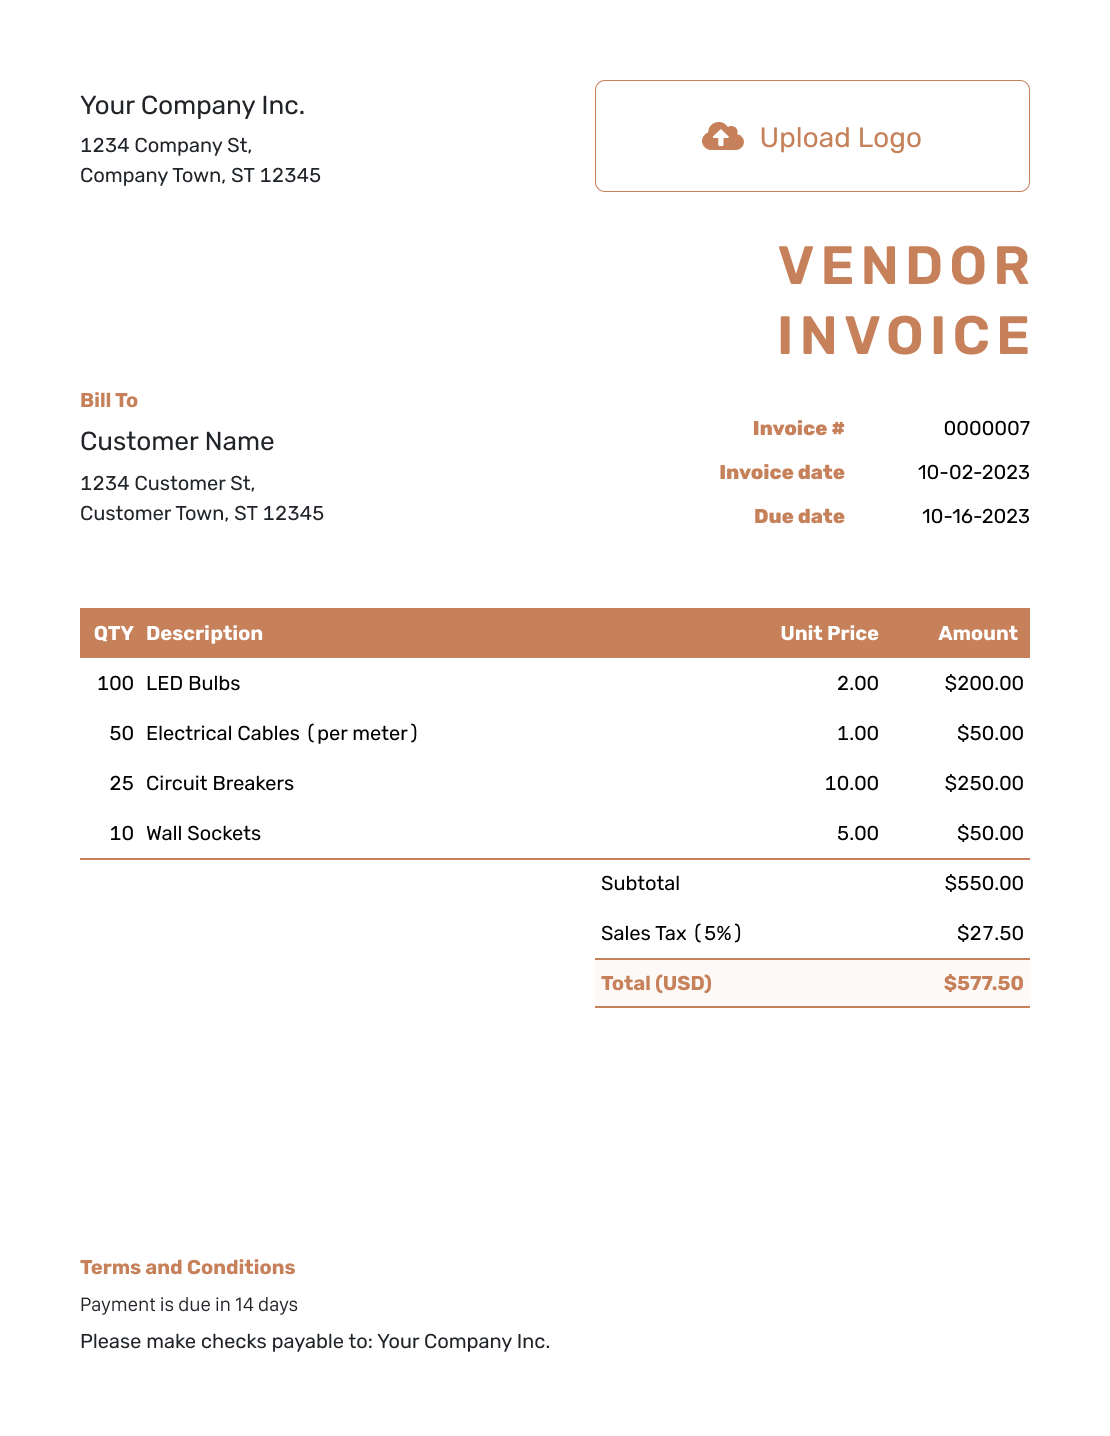 Standard Vendor Invoice Template